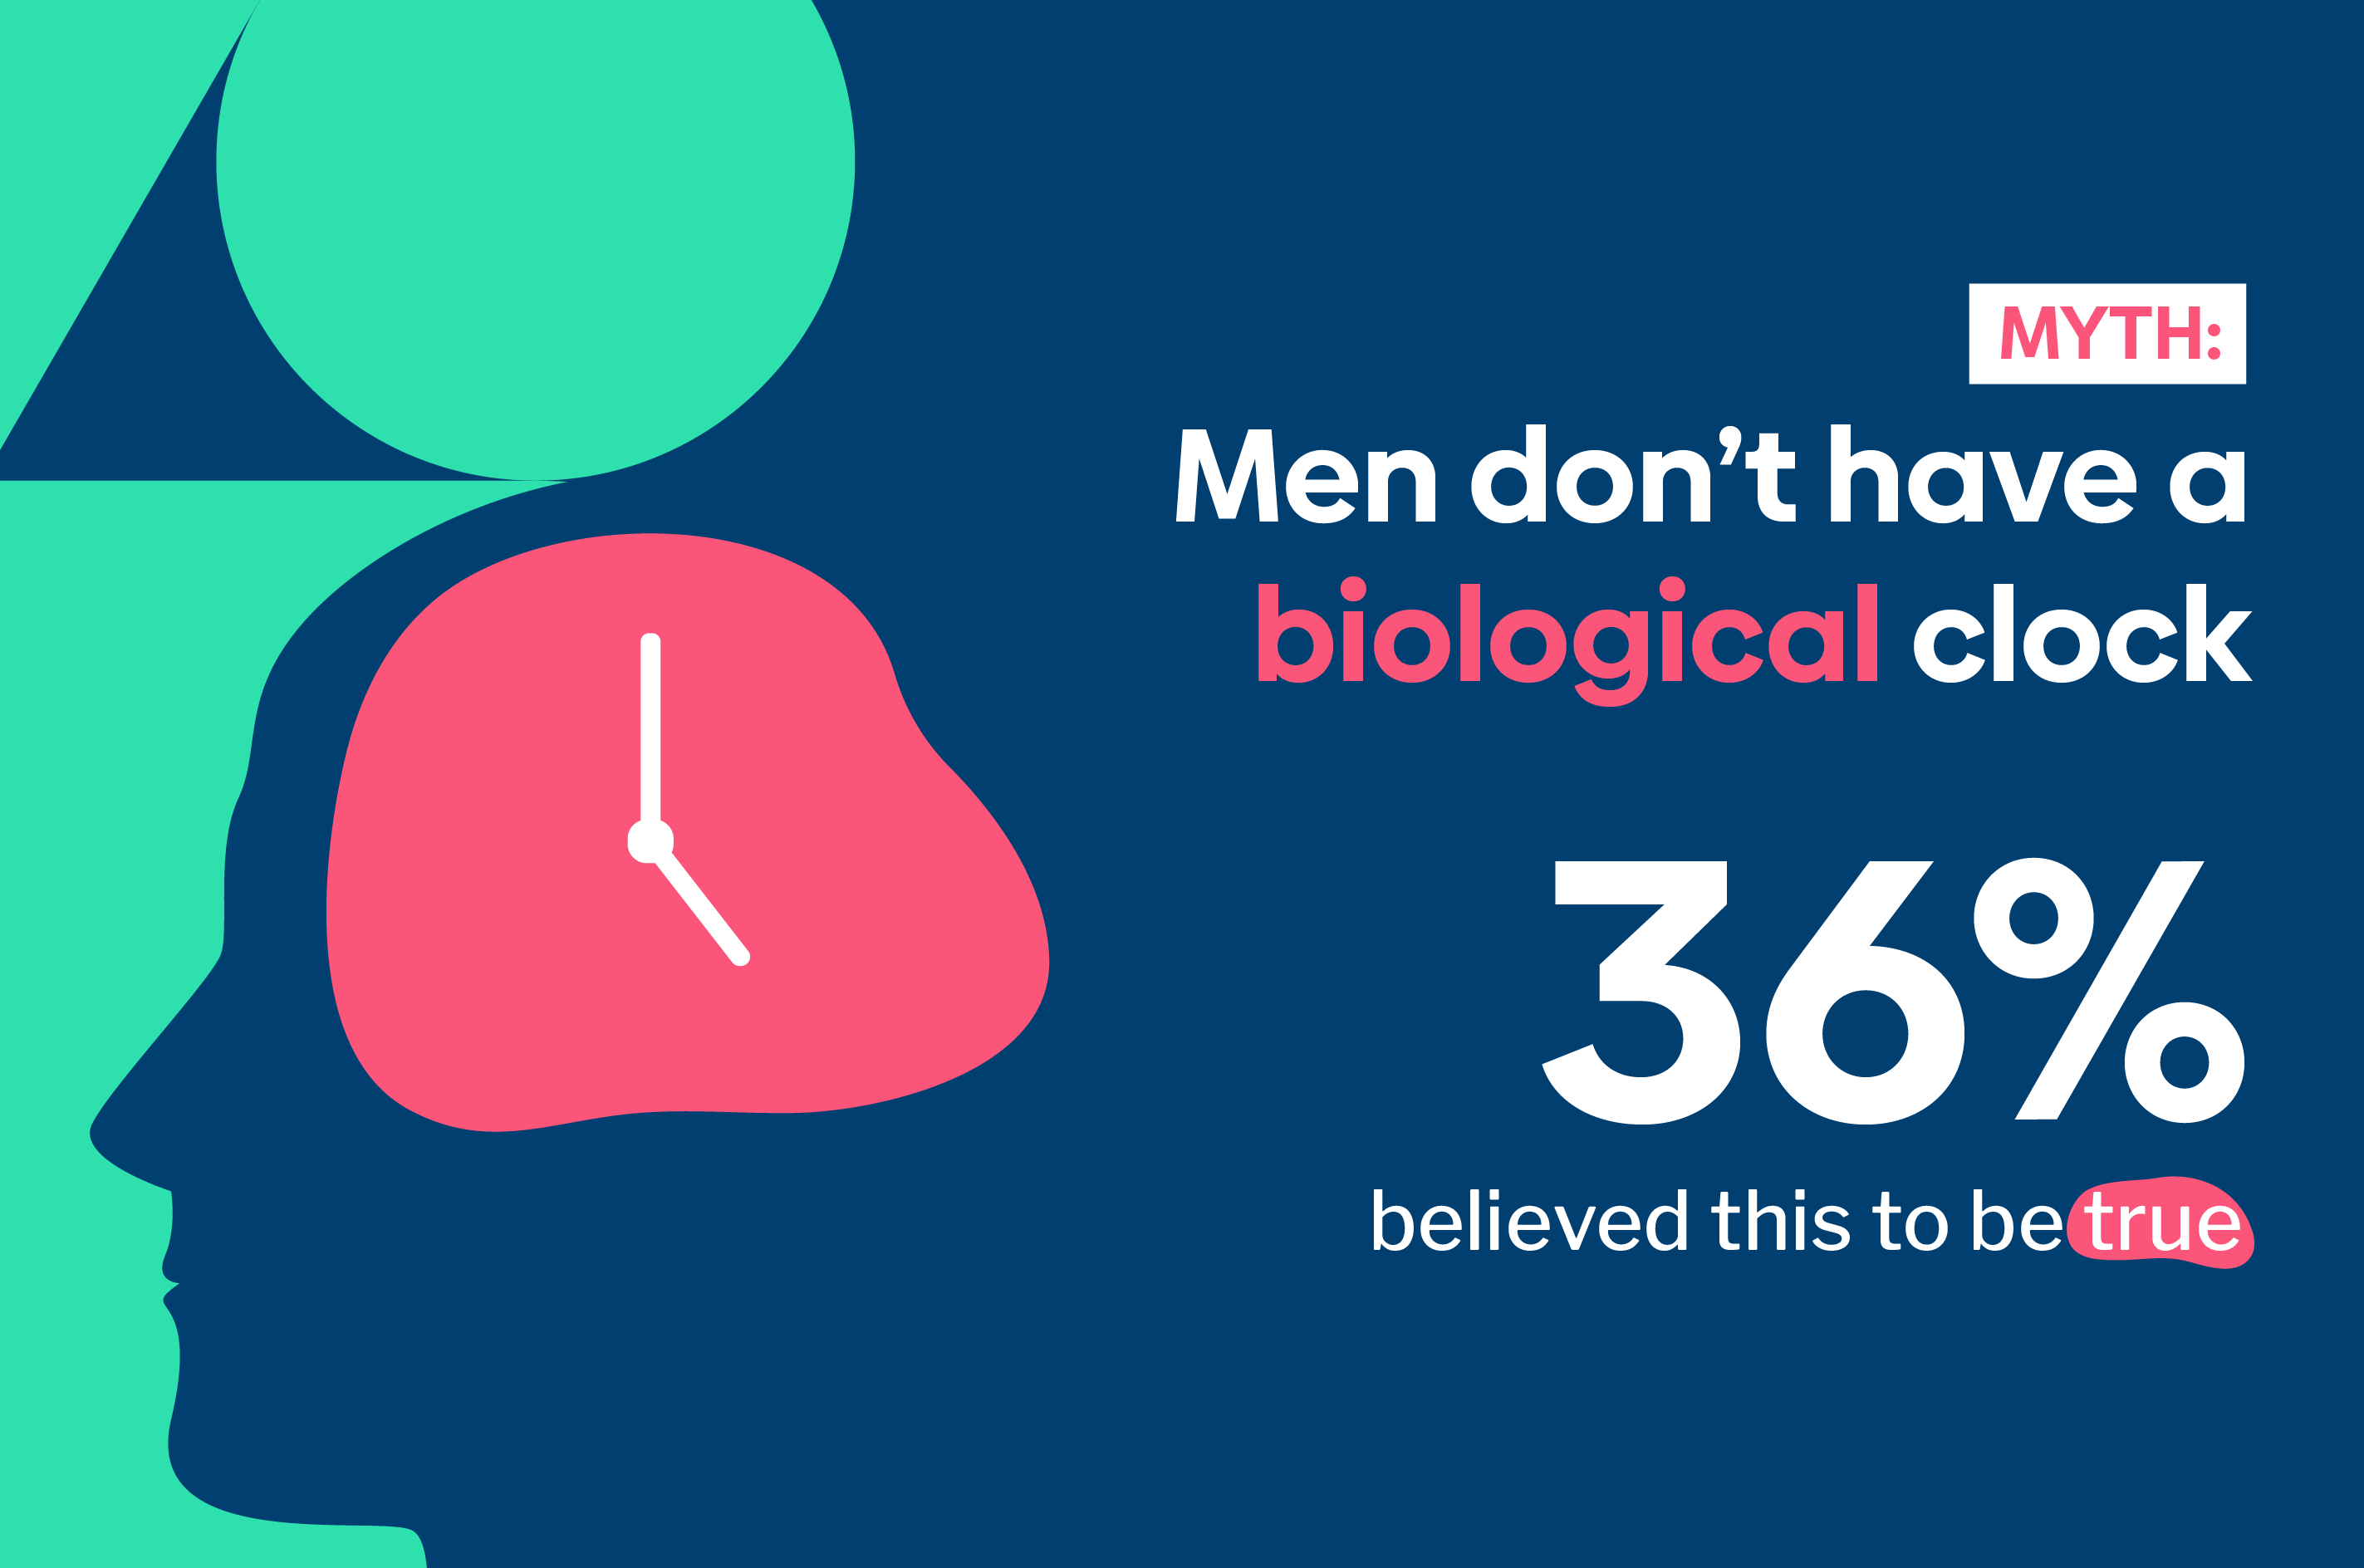 Men don't have a biological clock fertility myth